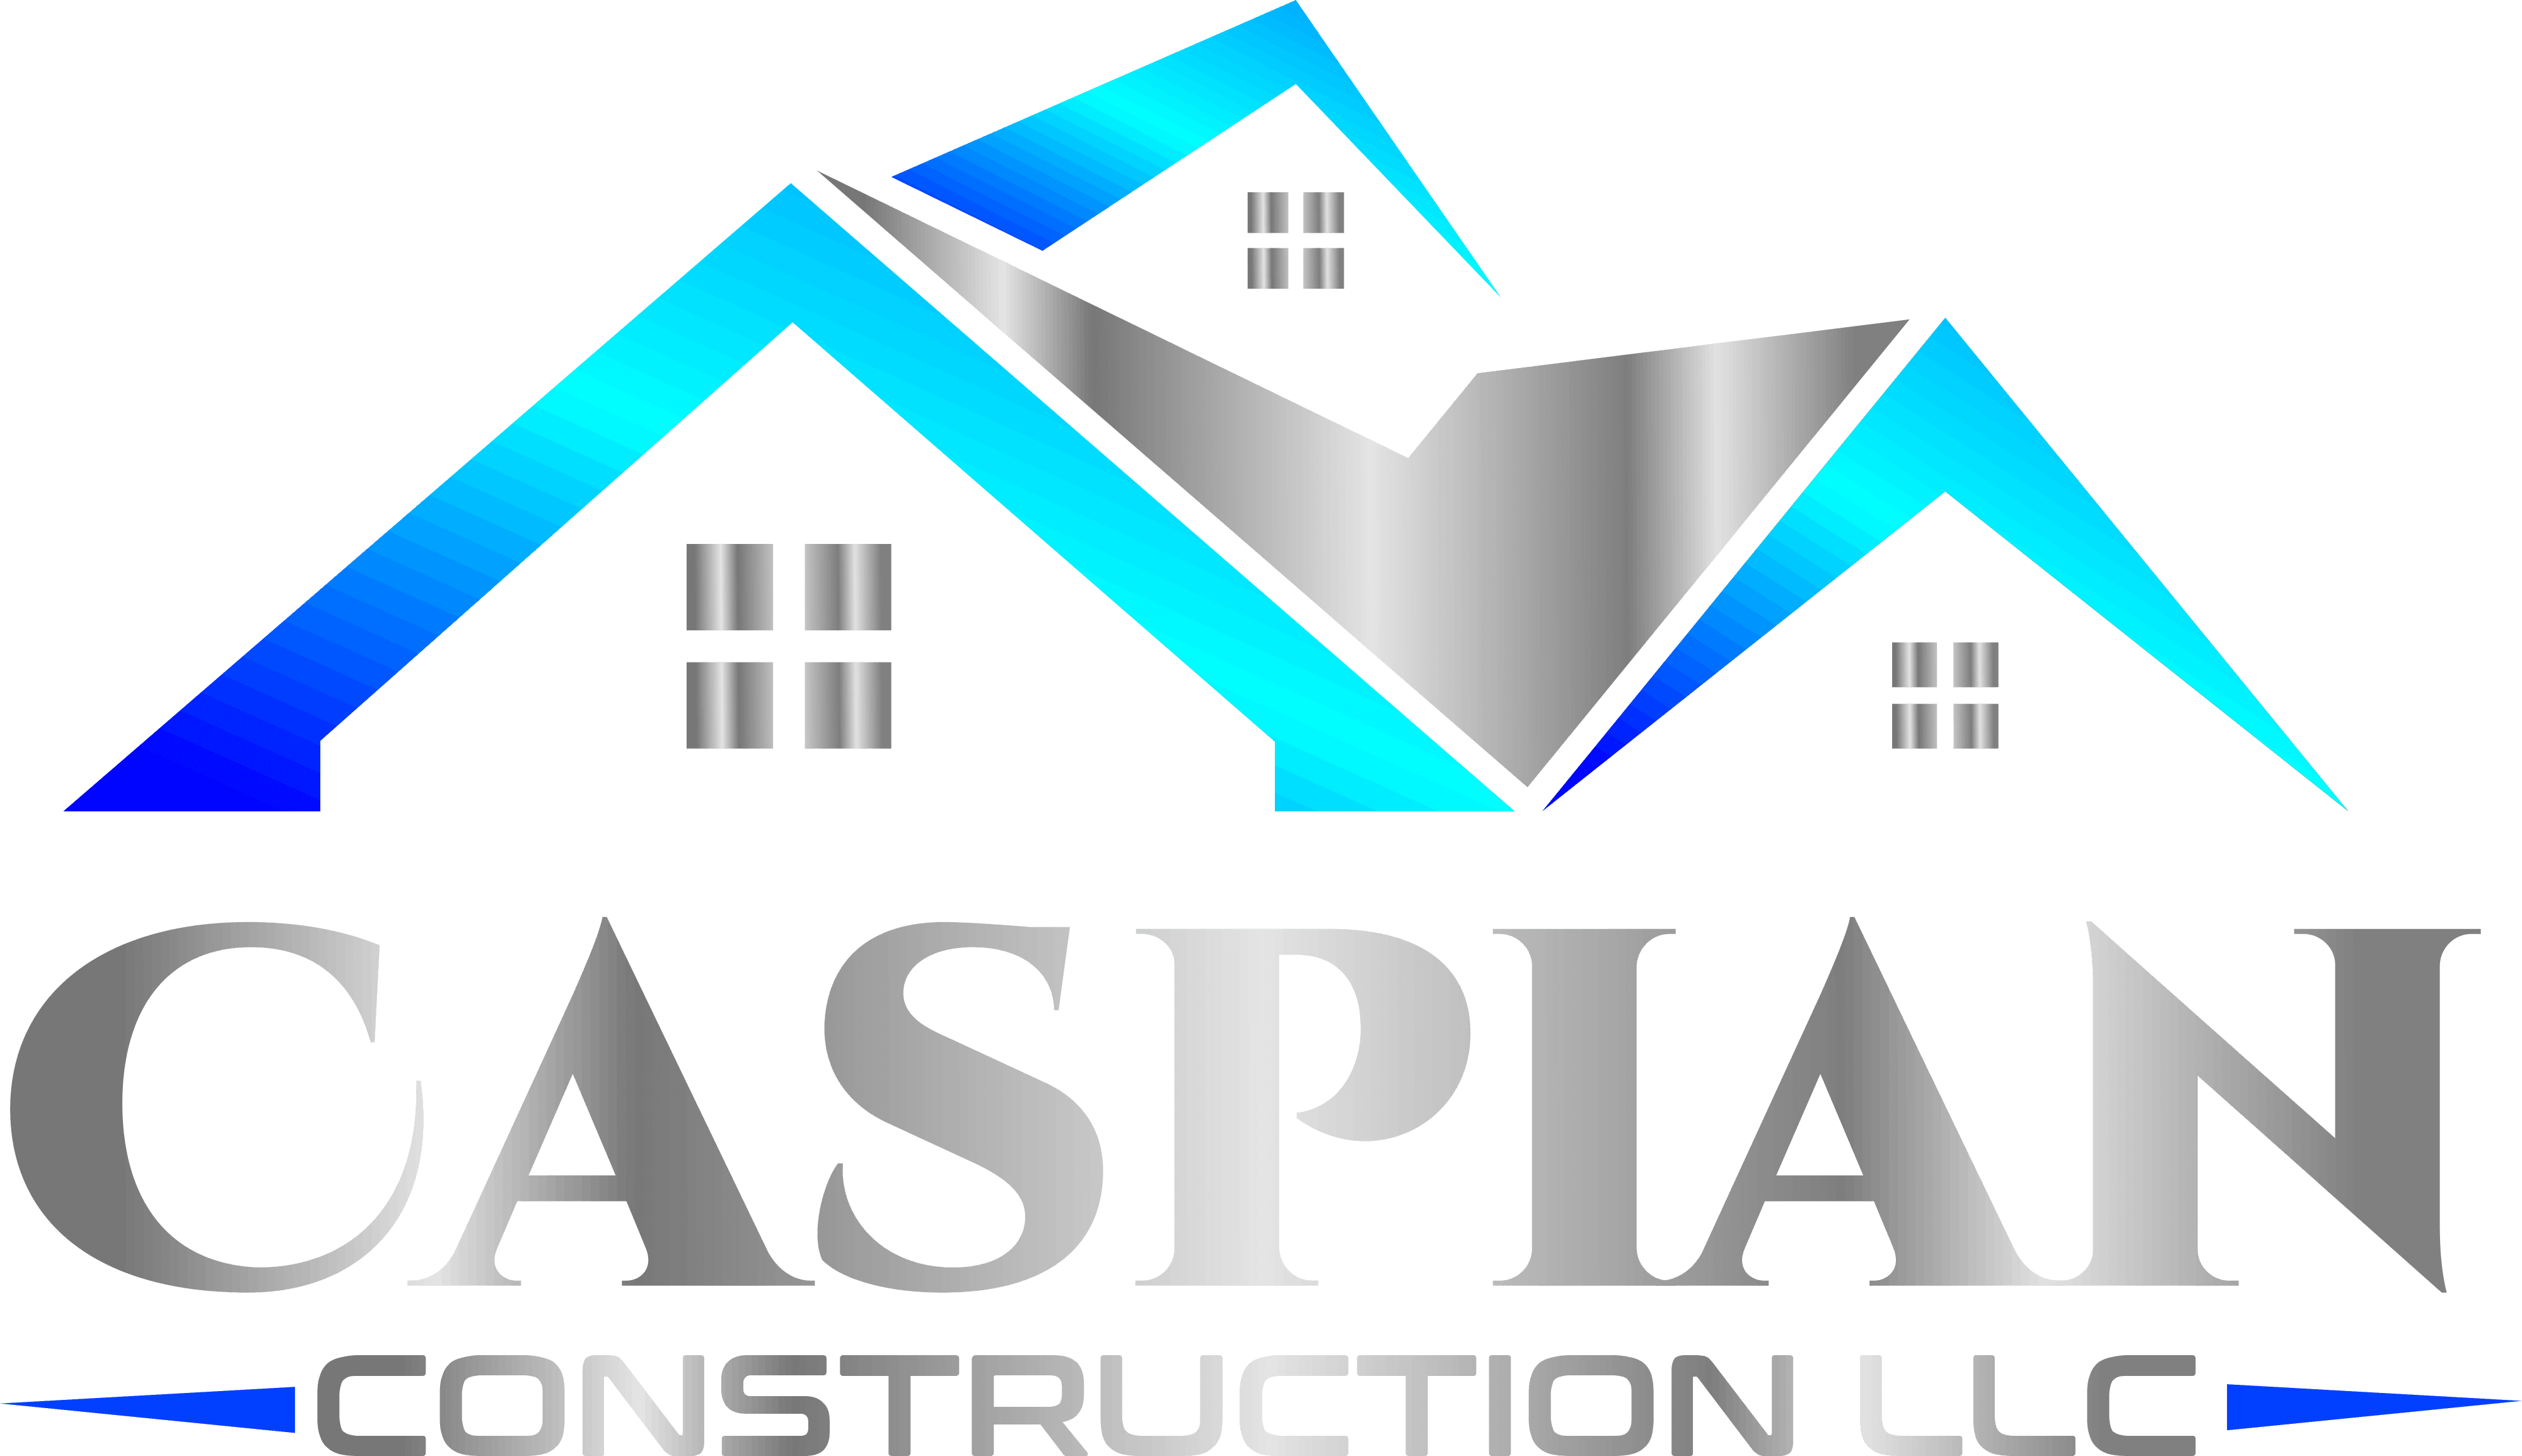 Caspian Construction